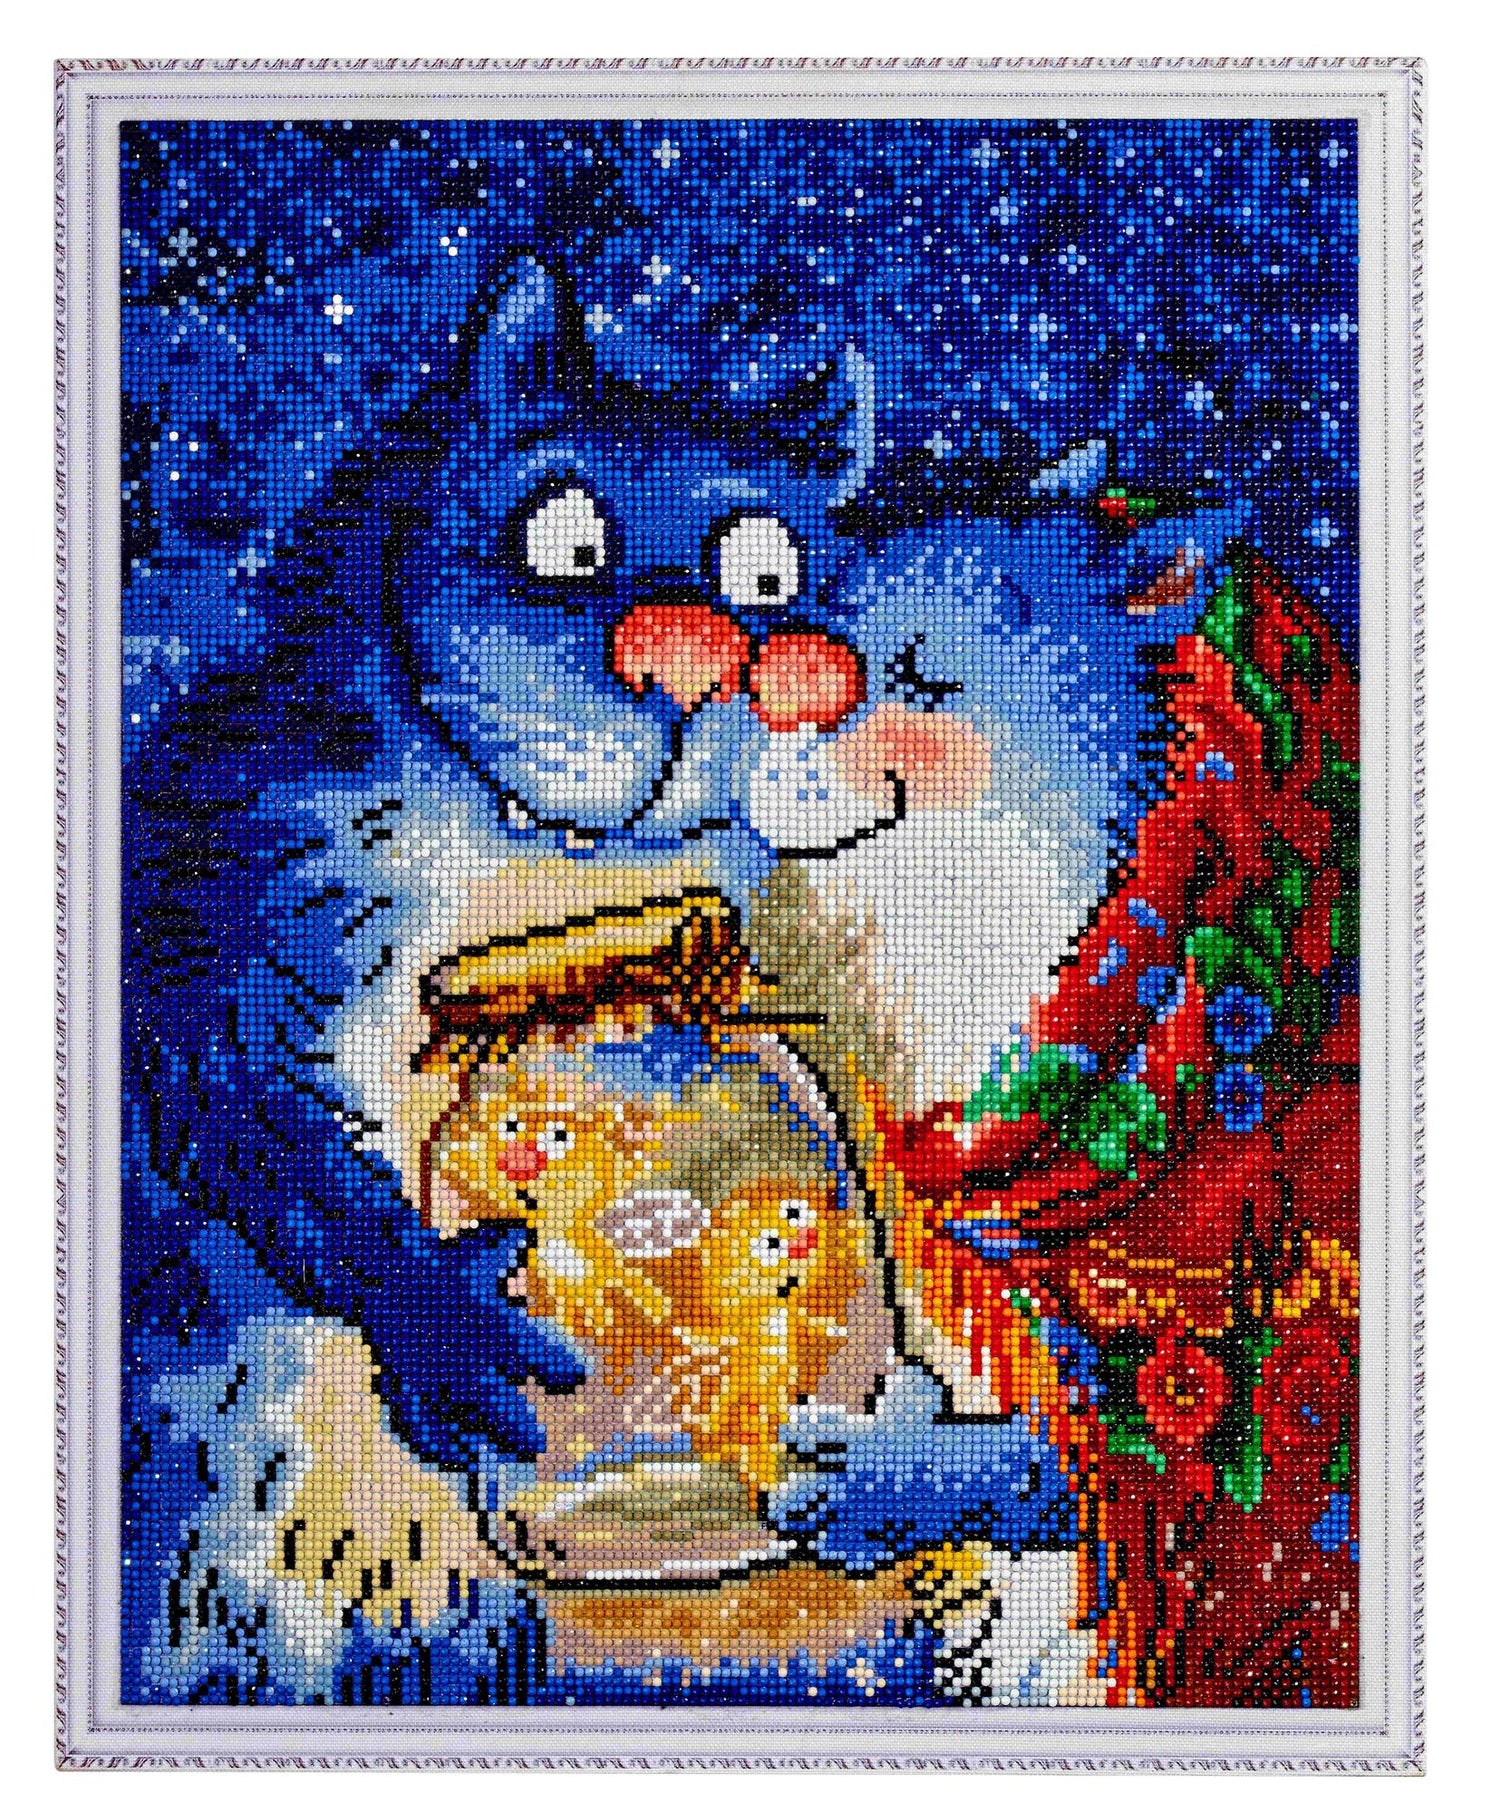 Diamond painting - LG276e - Cats - Romance With Fireflies Image 3